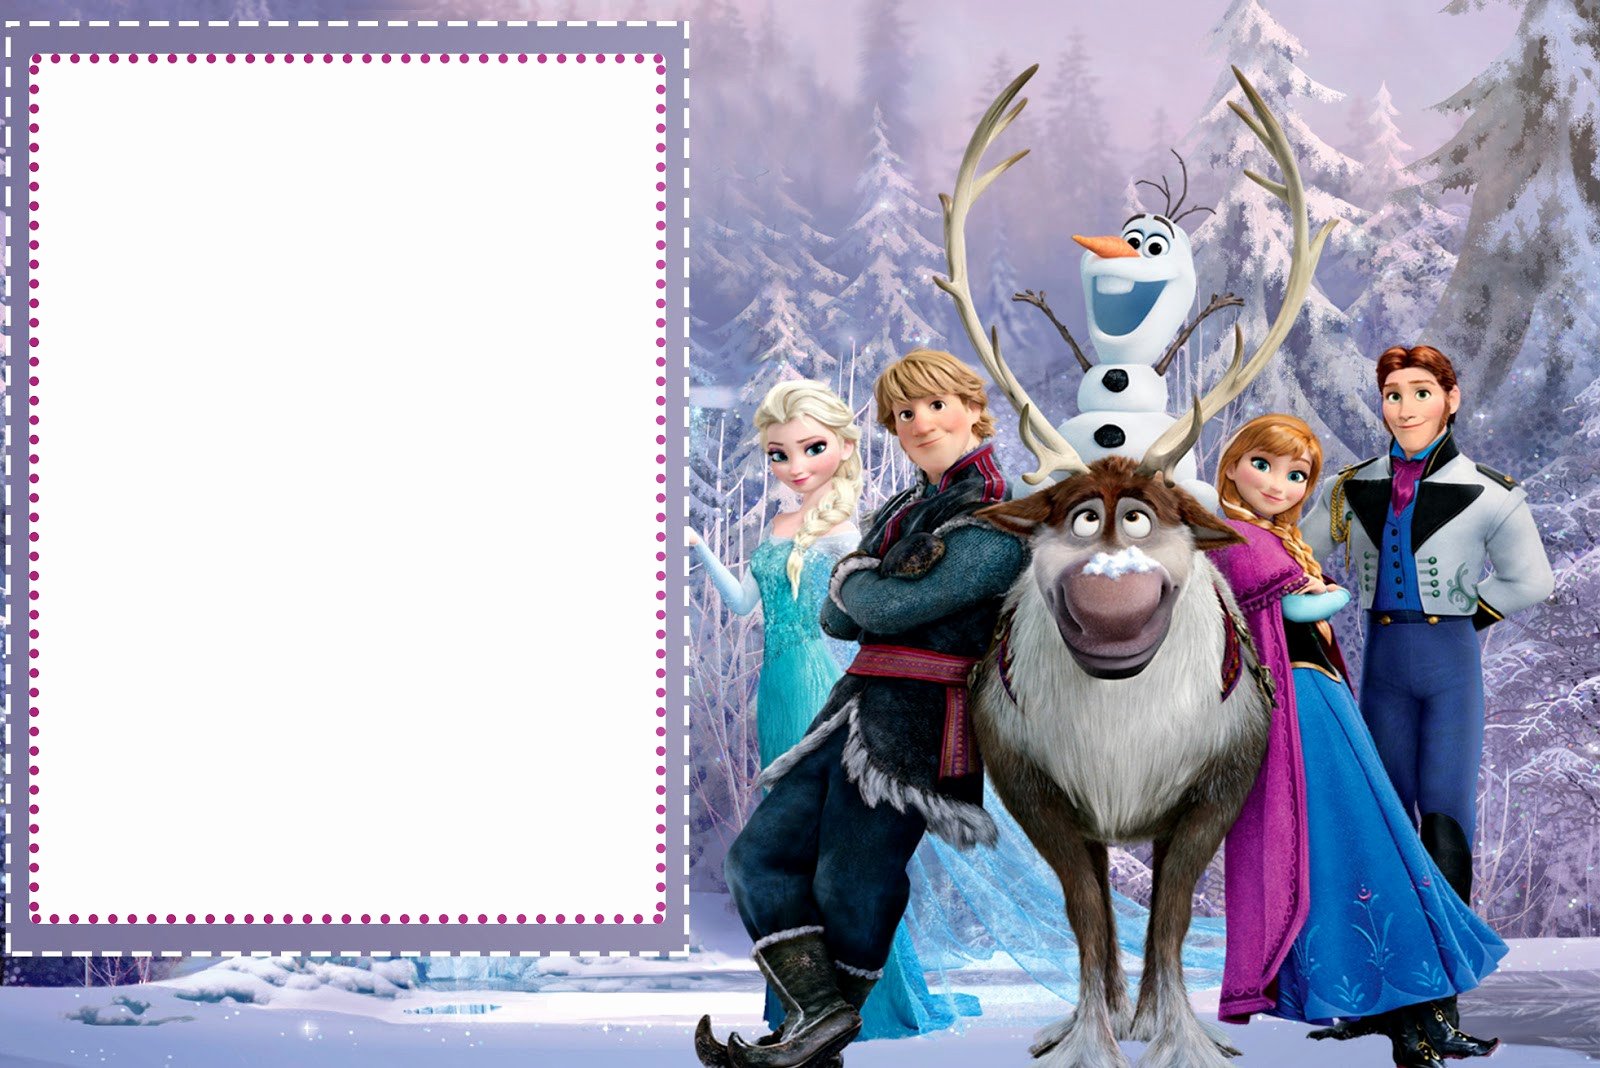 Free Frozen Invitation Templates Lovely Free Printable Frozen Birthday Invitations Anna and Elsa